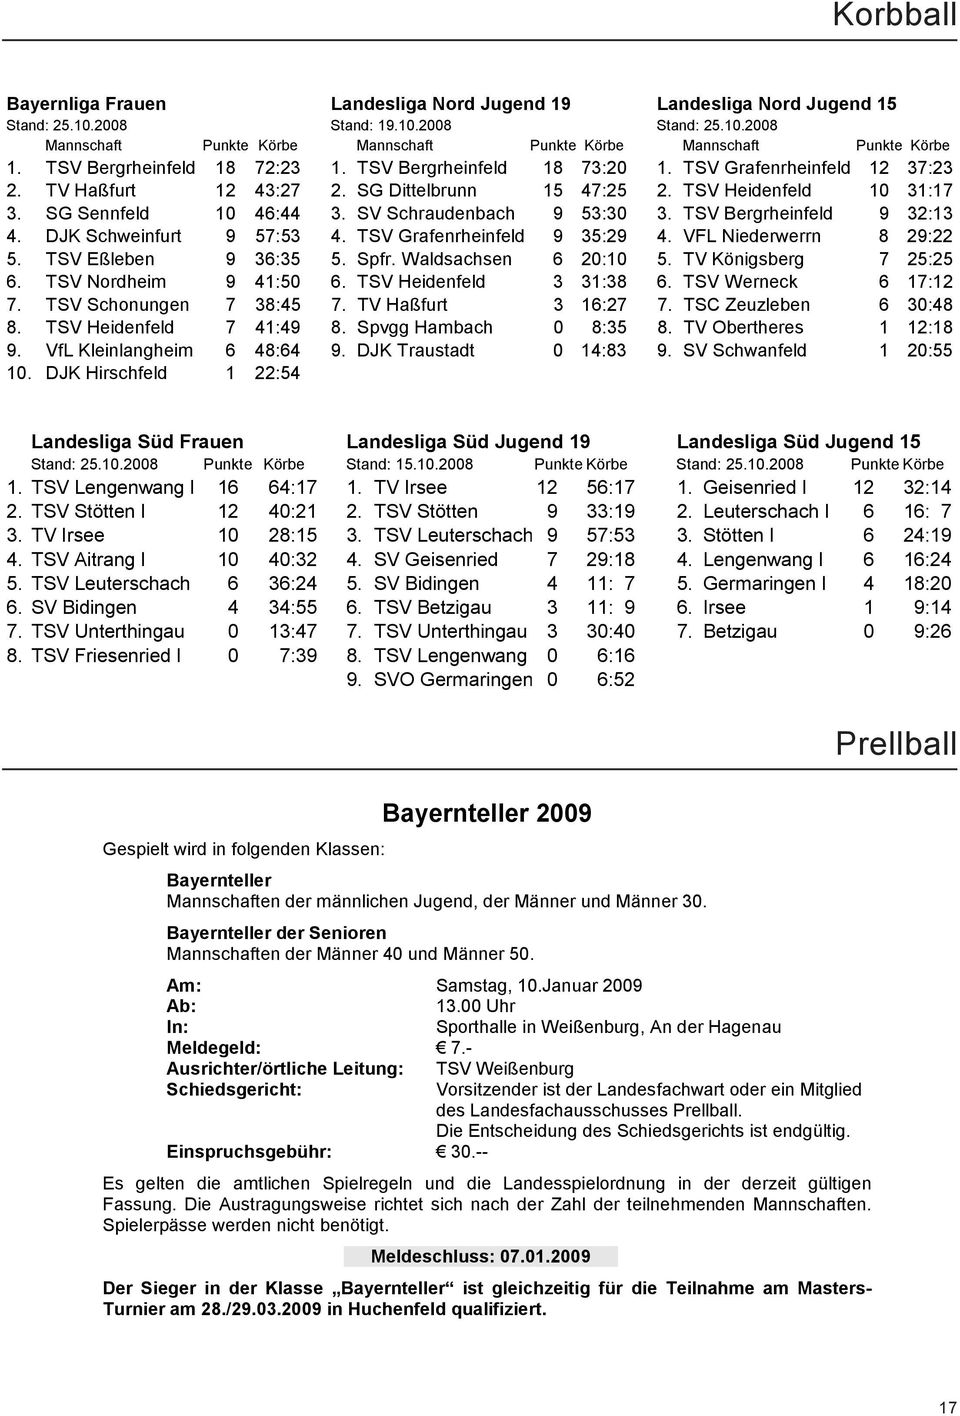 SV Schraudenbach 9 53:30 3. TSV Bergrheinfeld 9 32:13 4. DJK Schweinfurt 9 57:53 4. TSV Grafenrheinfeld 9 35:29 4. VFL Niederwerrn 8 29:22 5. TSV Eßleben 9 36:35 5. Spfr. Waldsachsen 6 20:10 5.